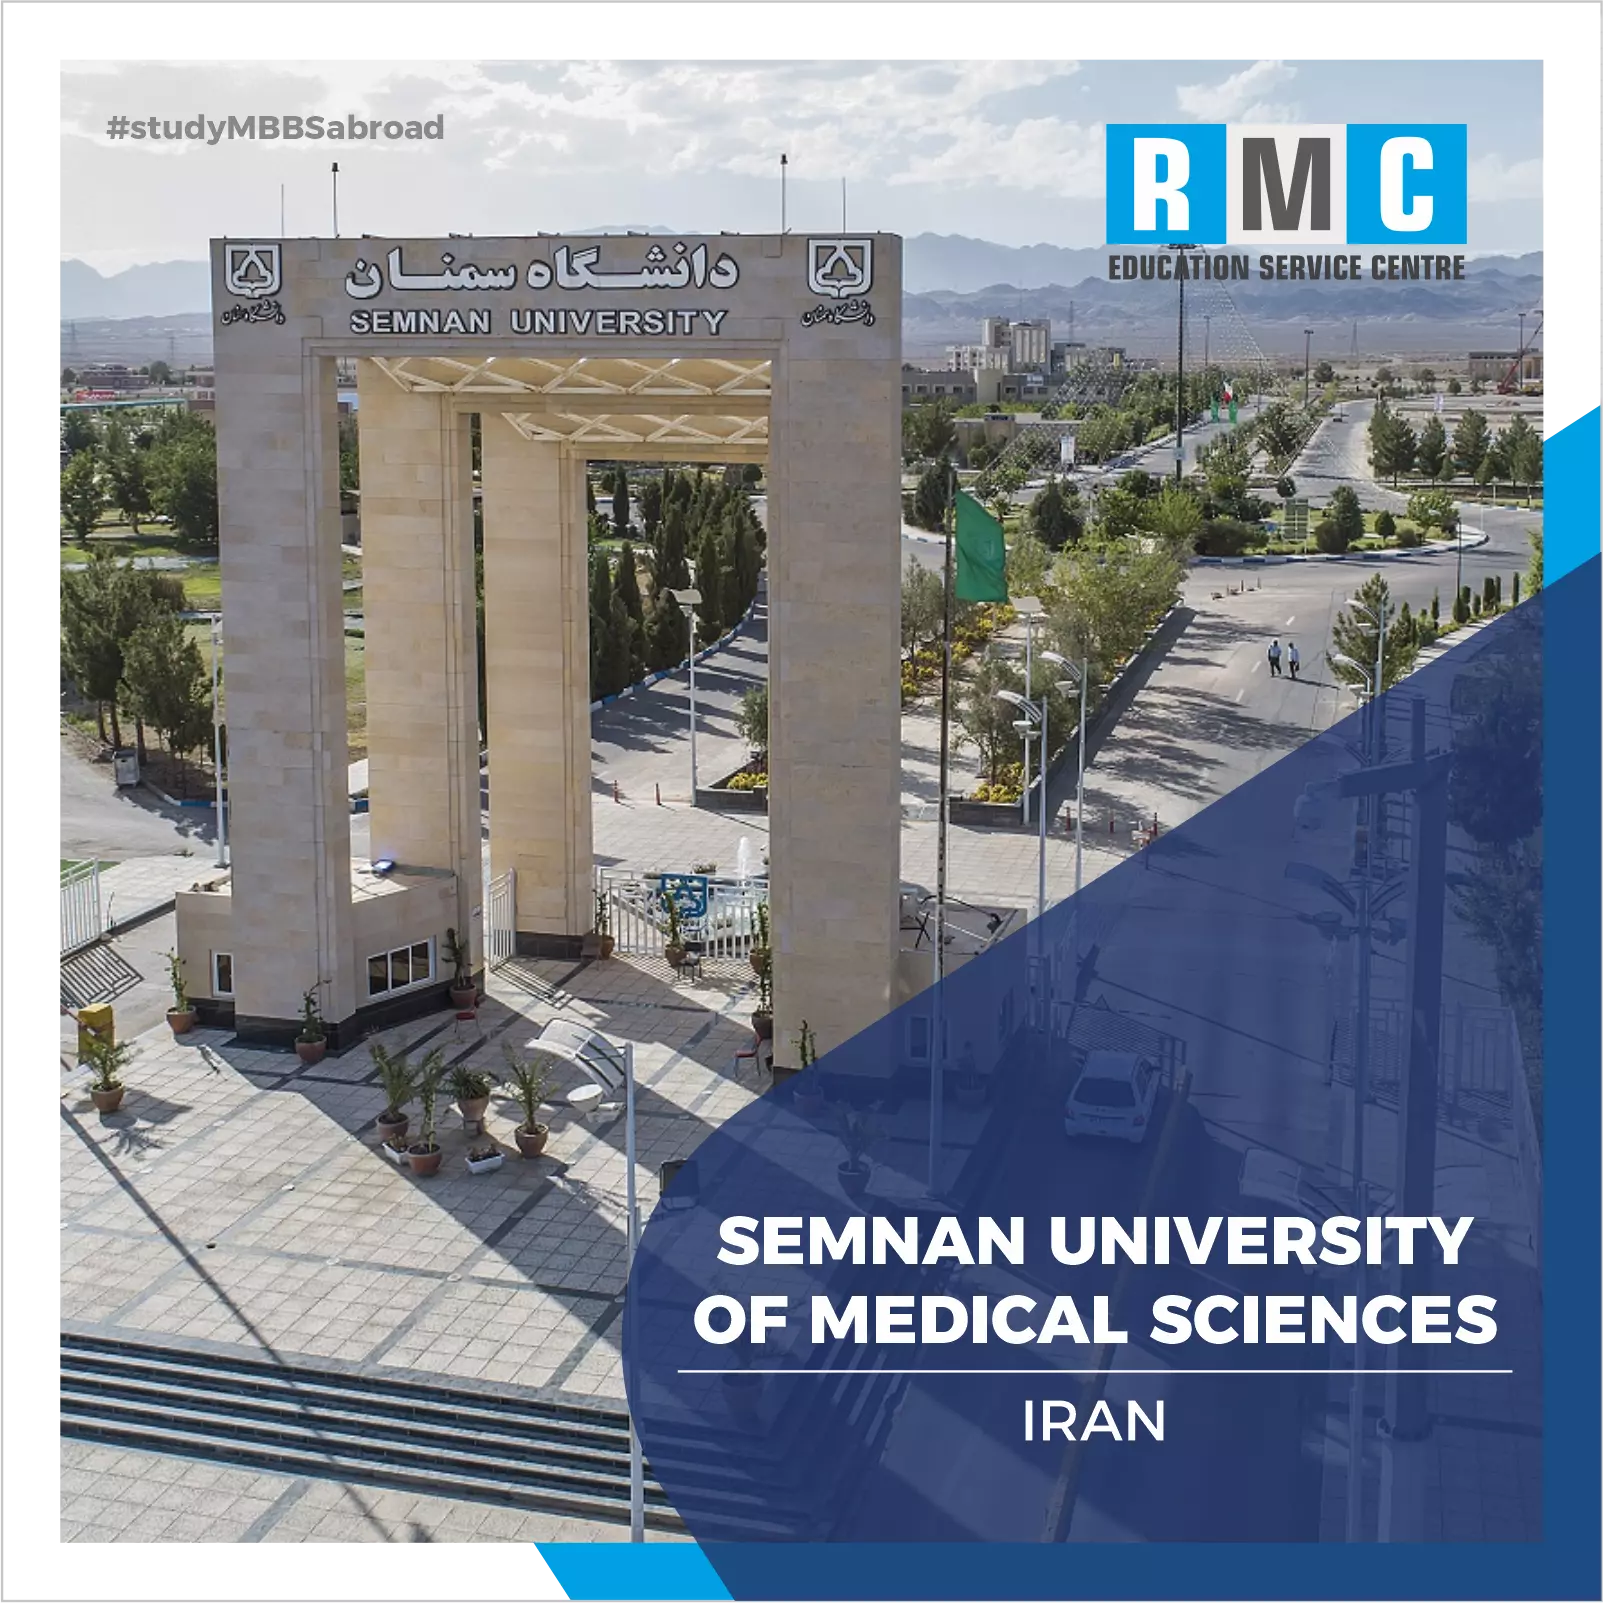 Semnan University of Medical Sciences